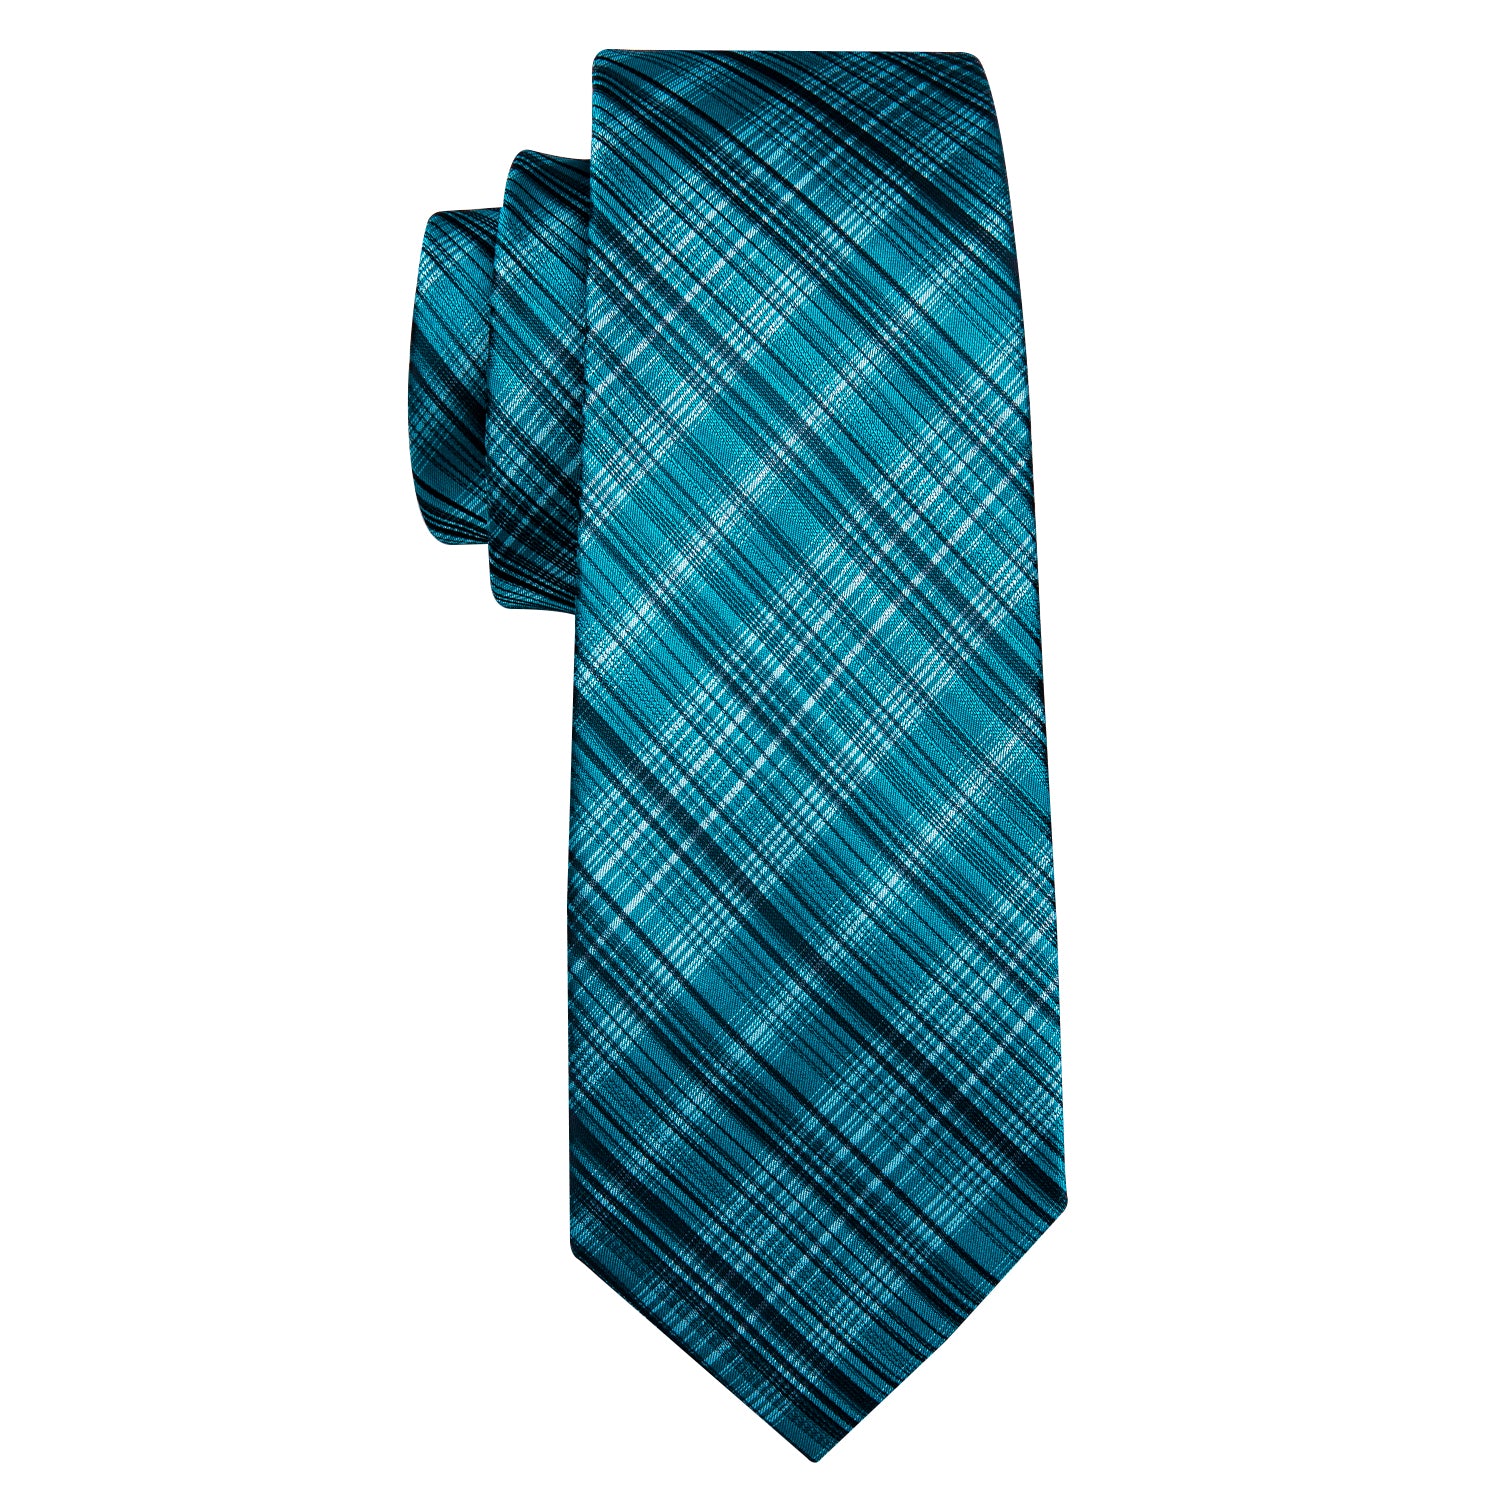 High Gloss Blue and Black Stripe Tie Pocket Square Cufflinks Set